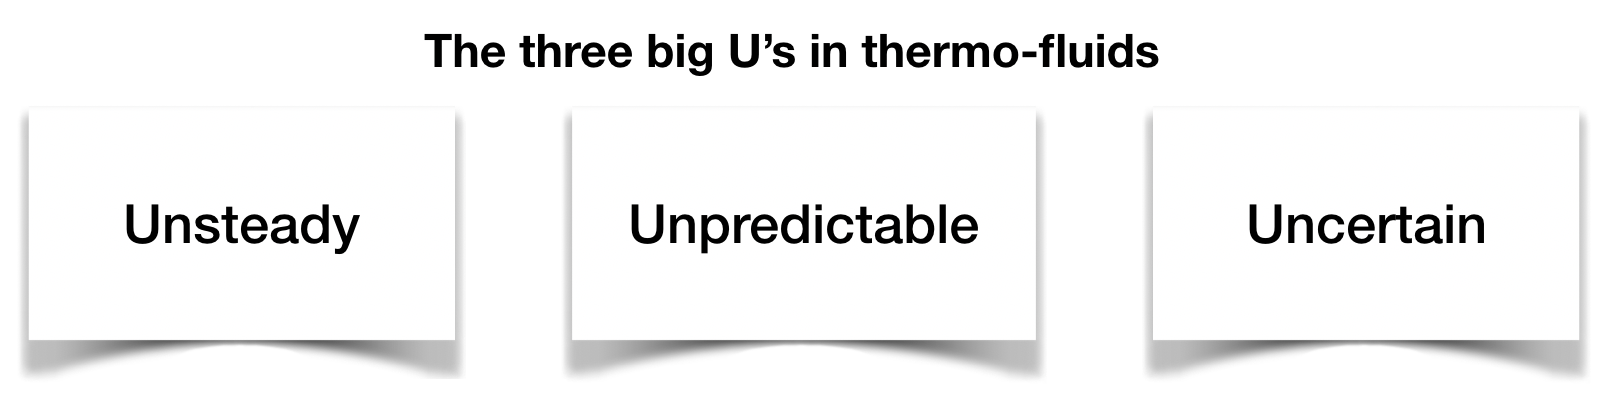 The three big U's in thermo-fluids